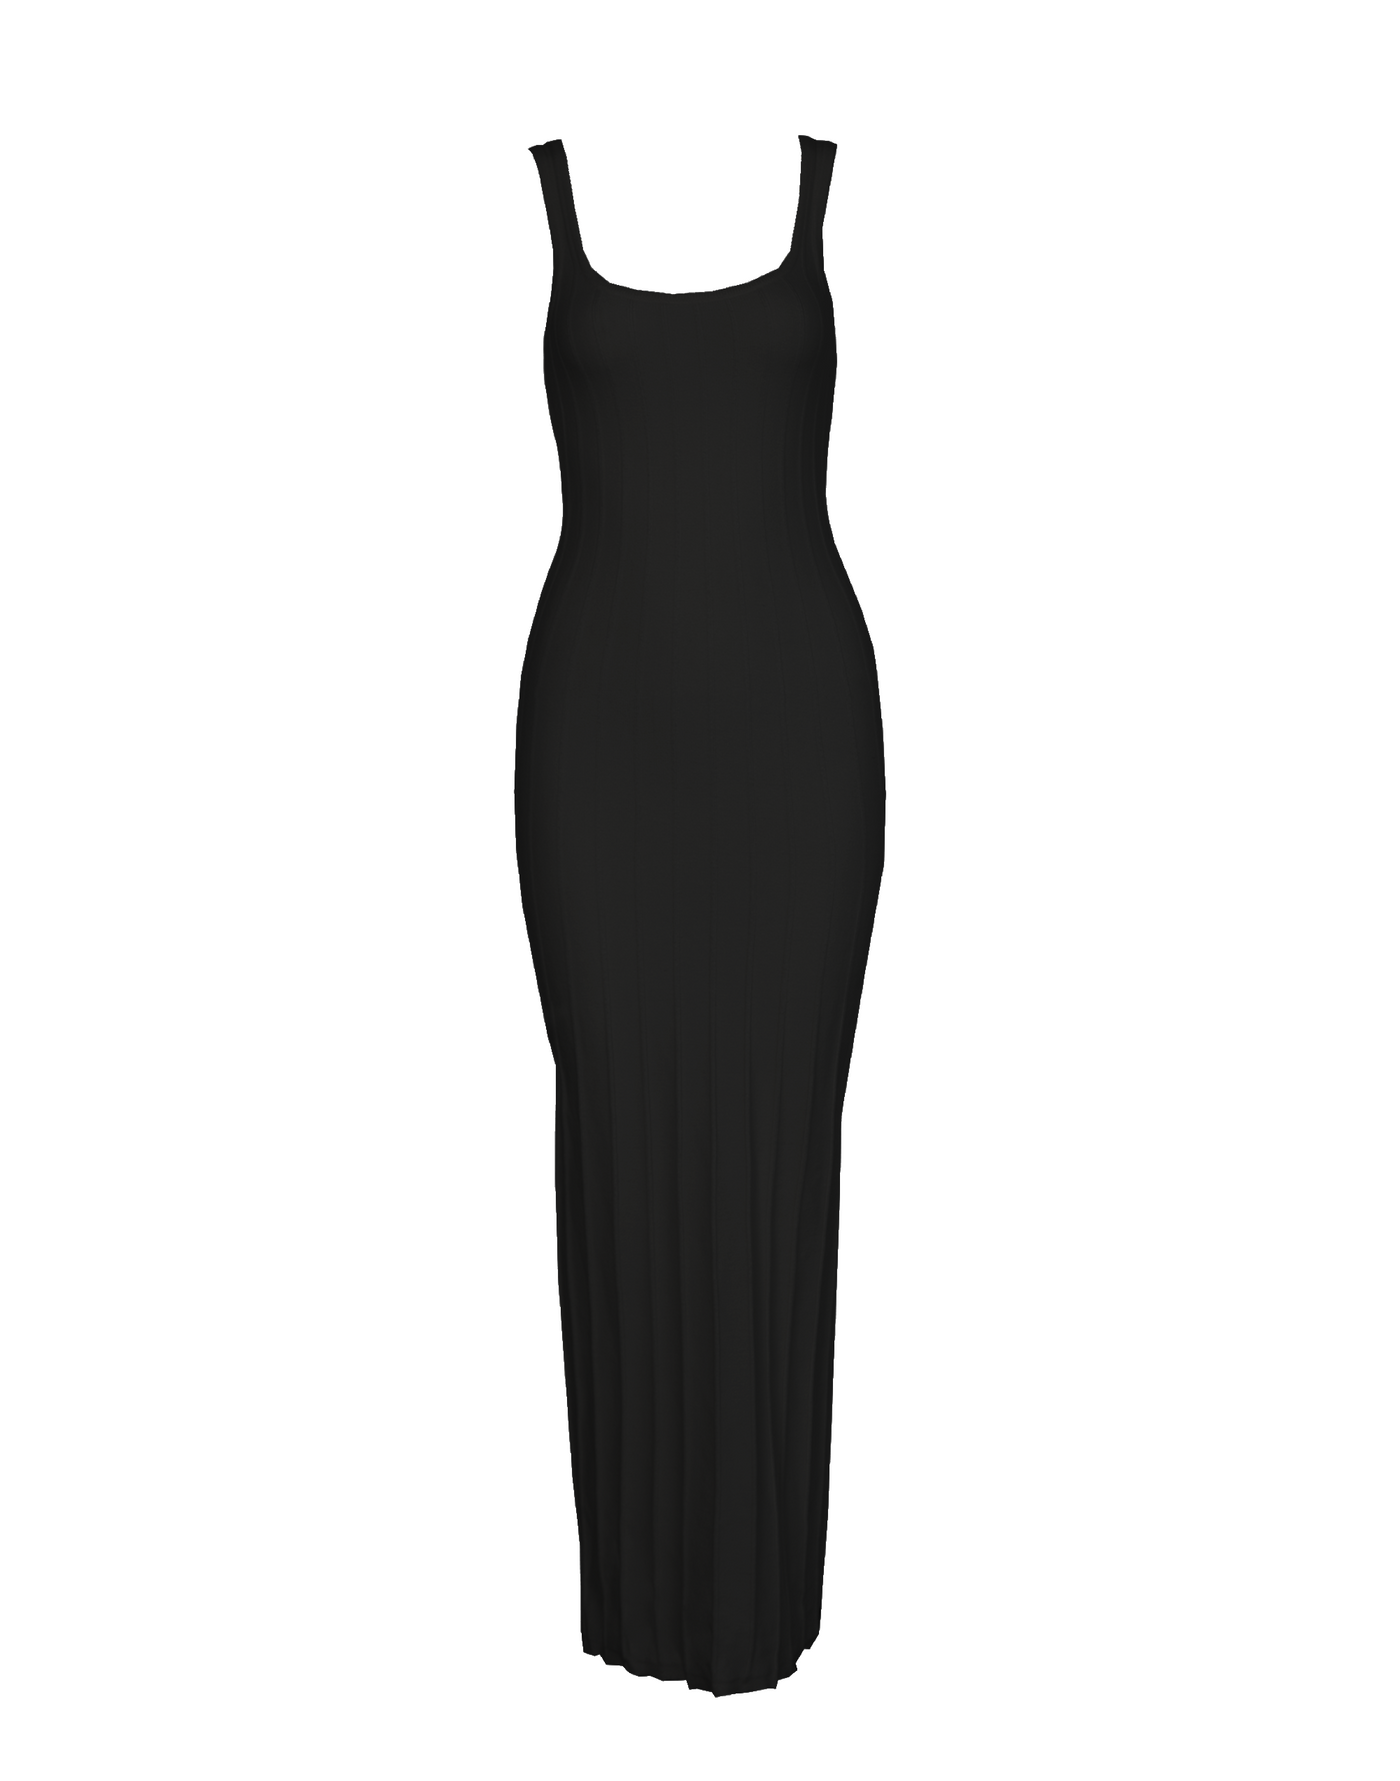 Ephemeral Maxi Dress (Black) - Black Knit Maxi Dress - Women's Dress - Charcoal Clothing